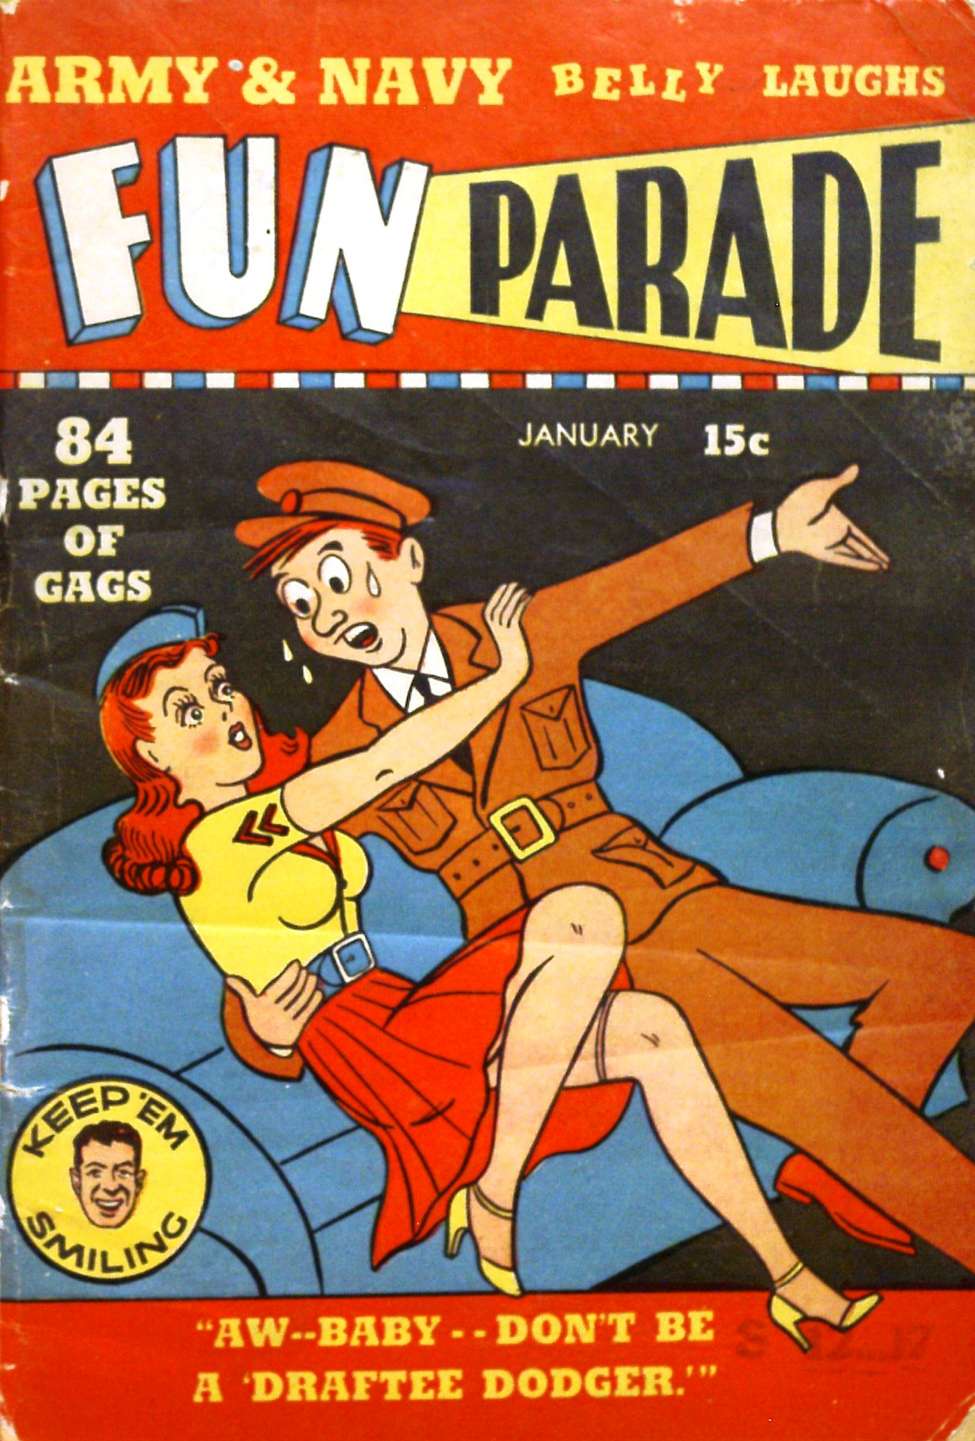 Comic Book Cover For Army & Navy Fun Parade 2